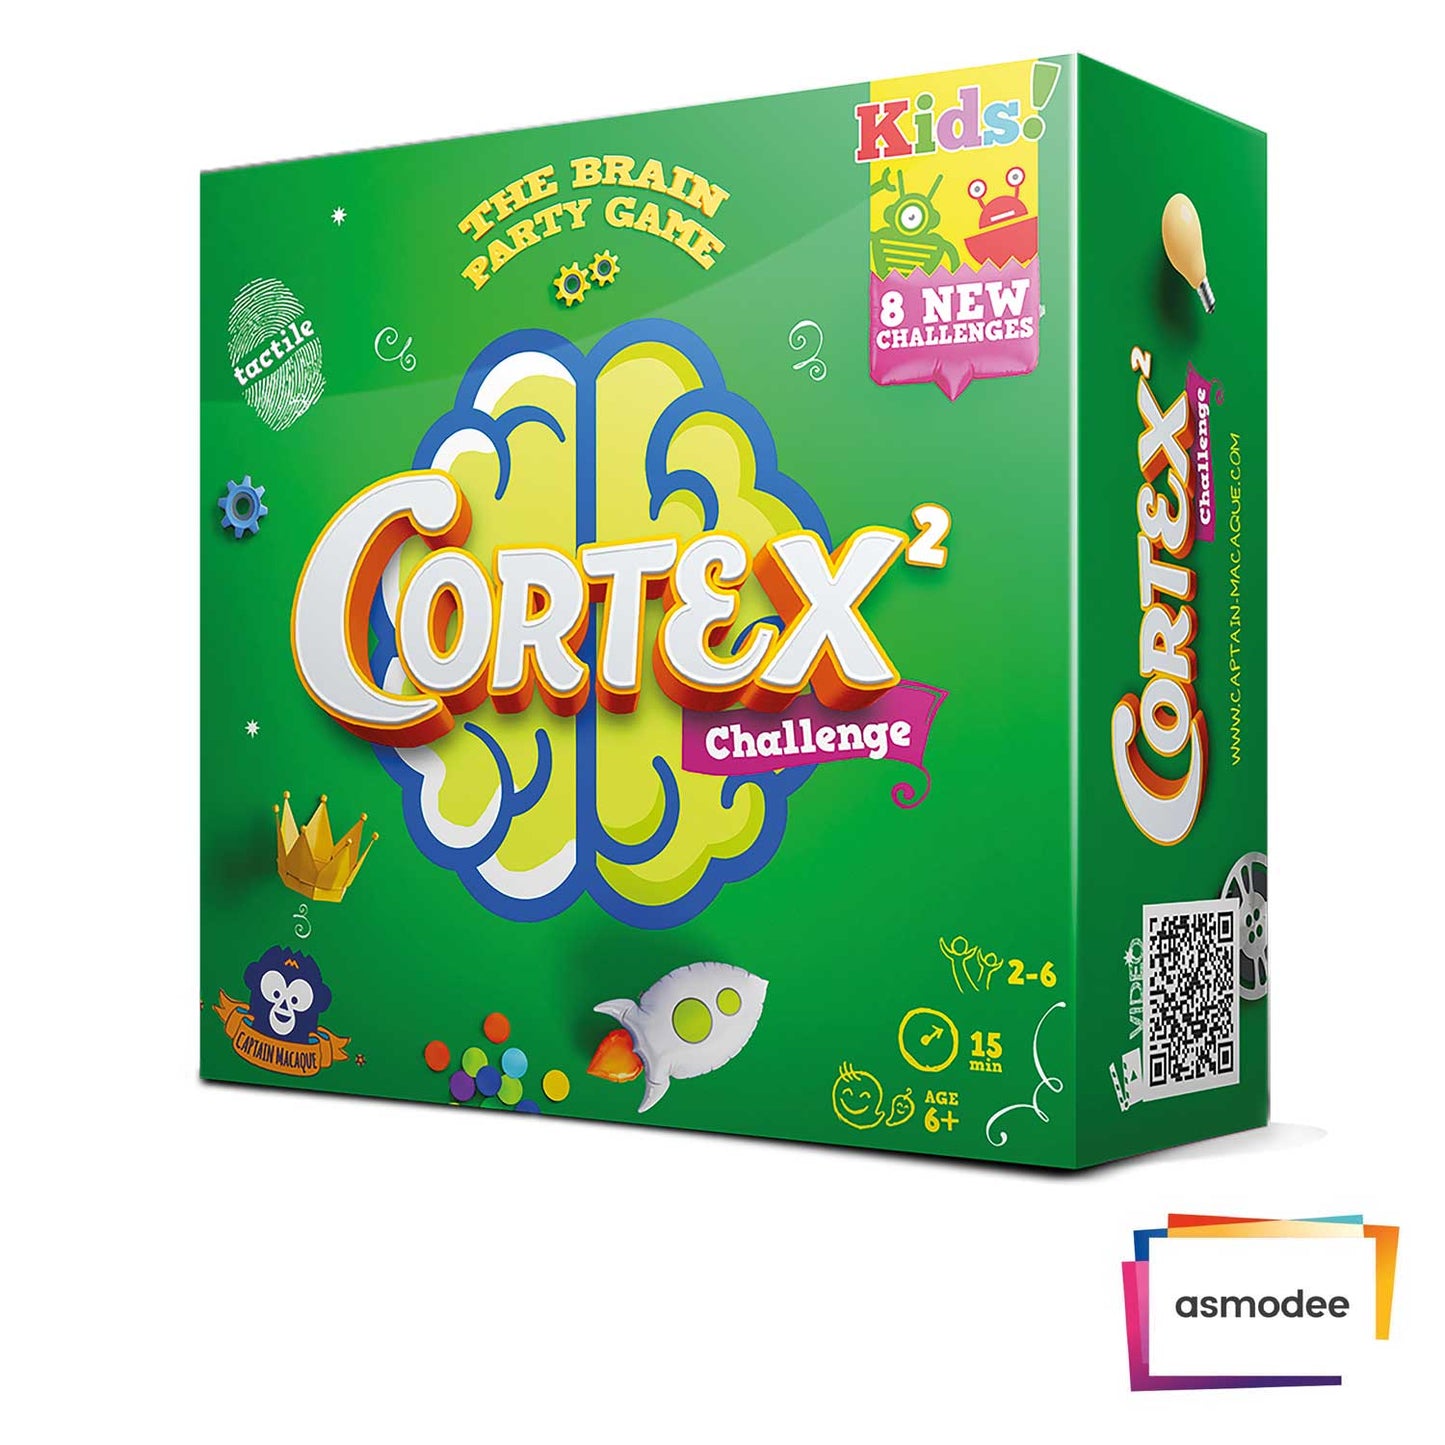 Asmodee - Cortex² Challenge Kids